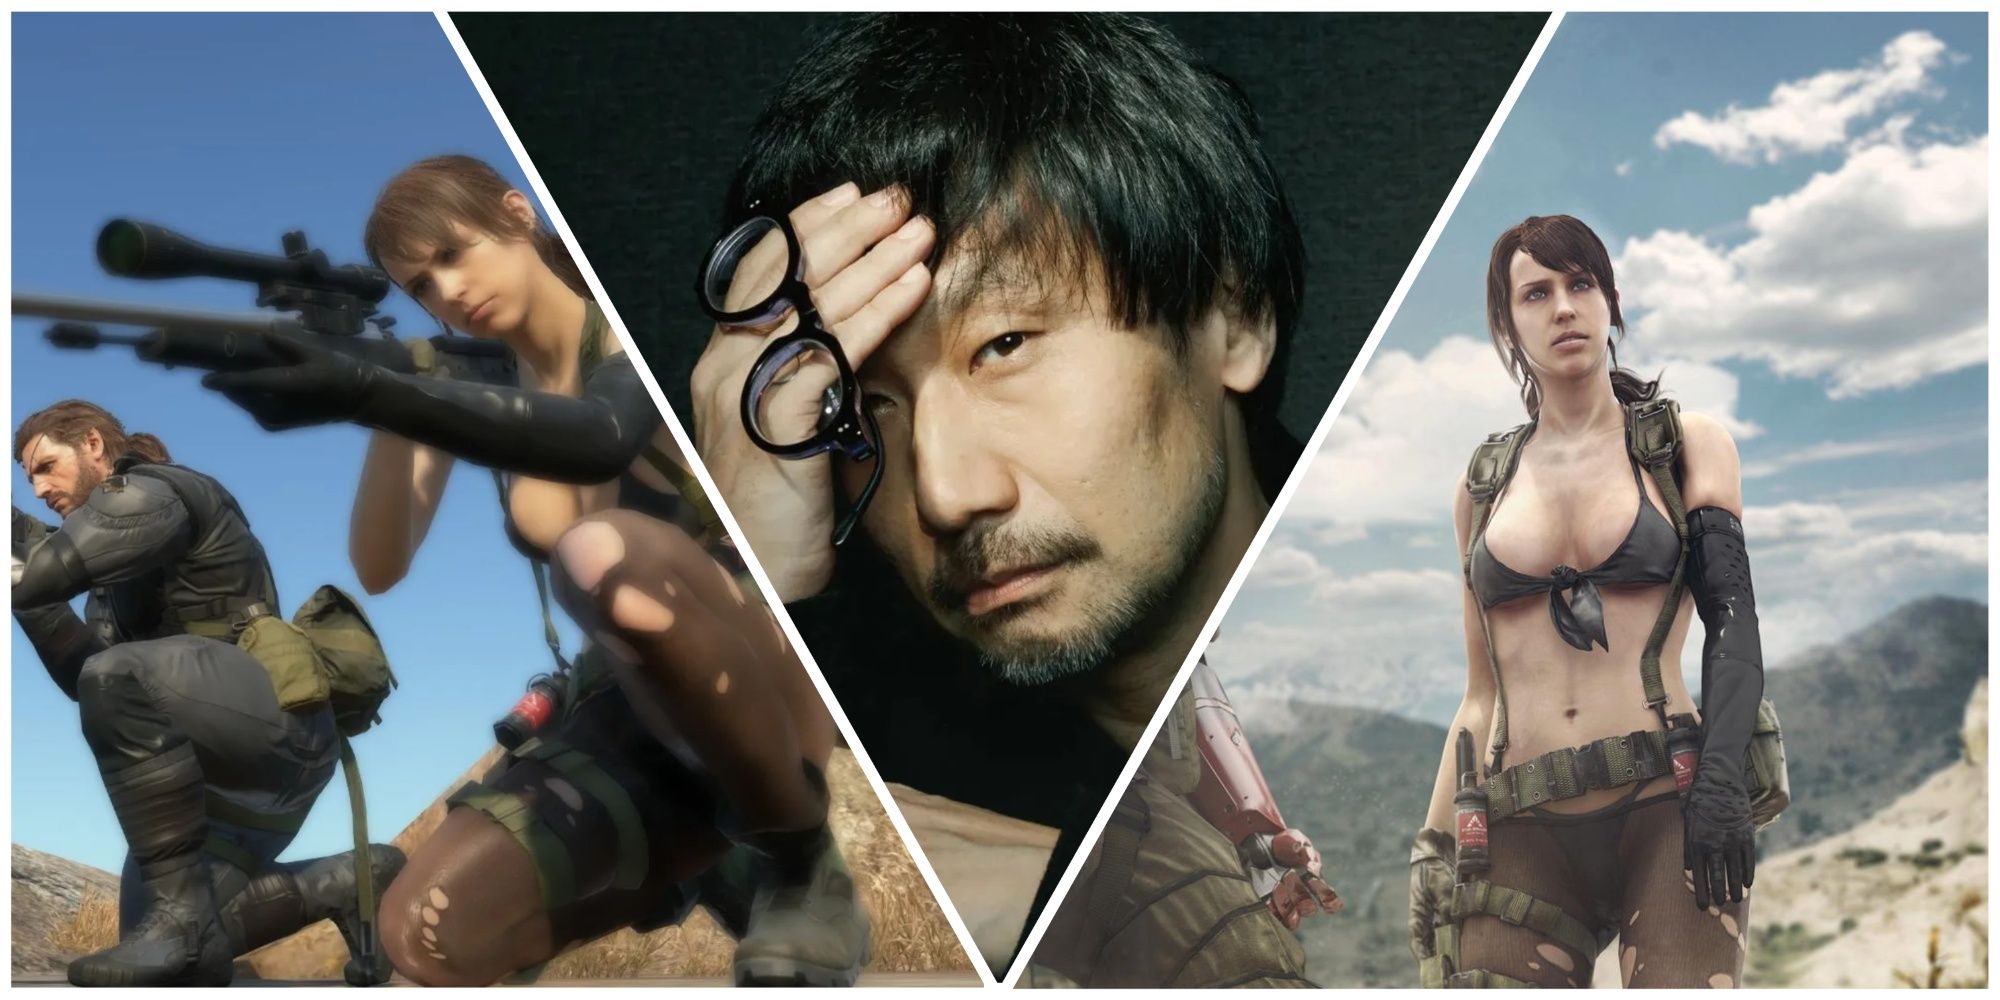 Hideo Kojima and Quiet collage